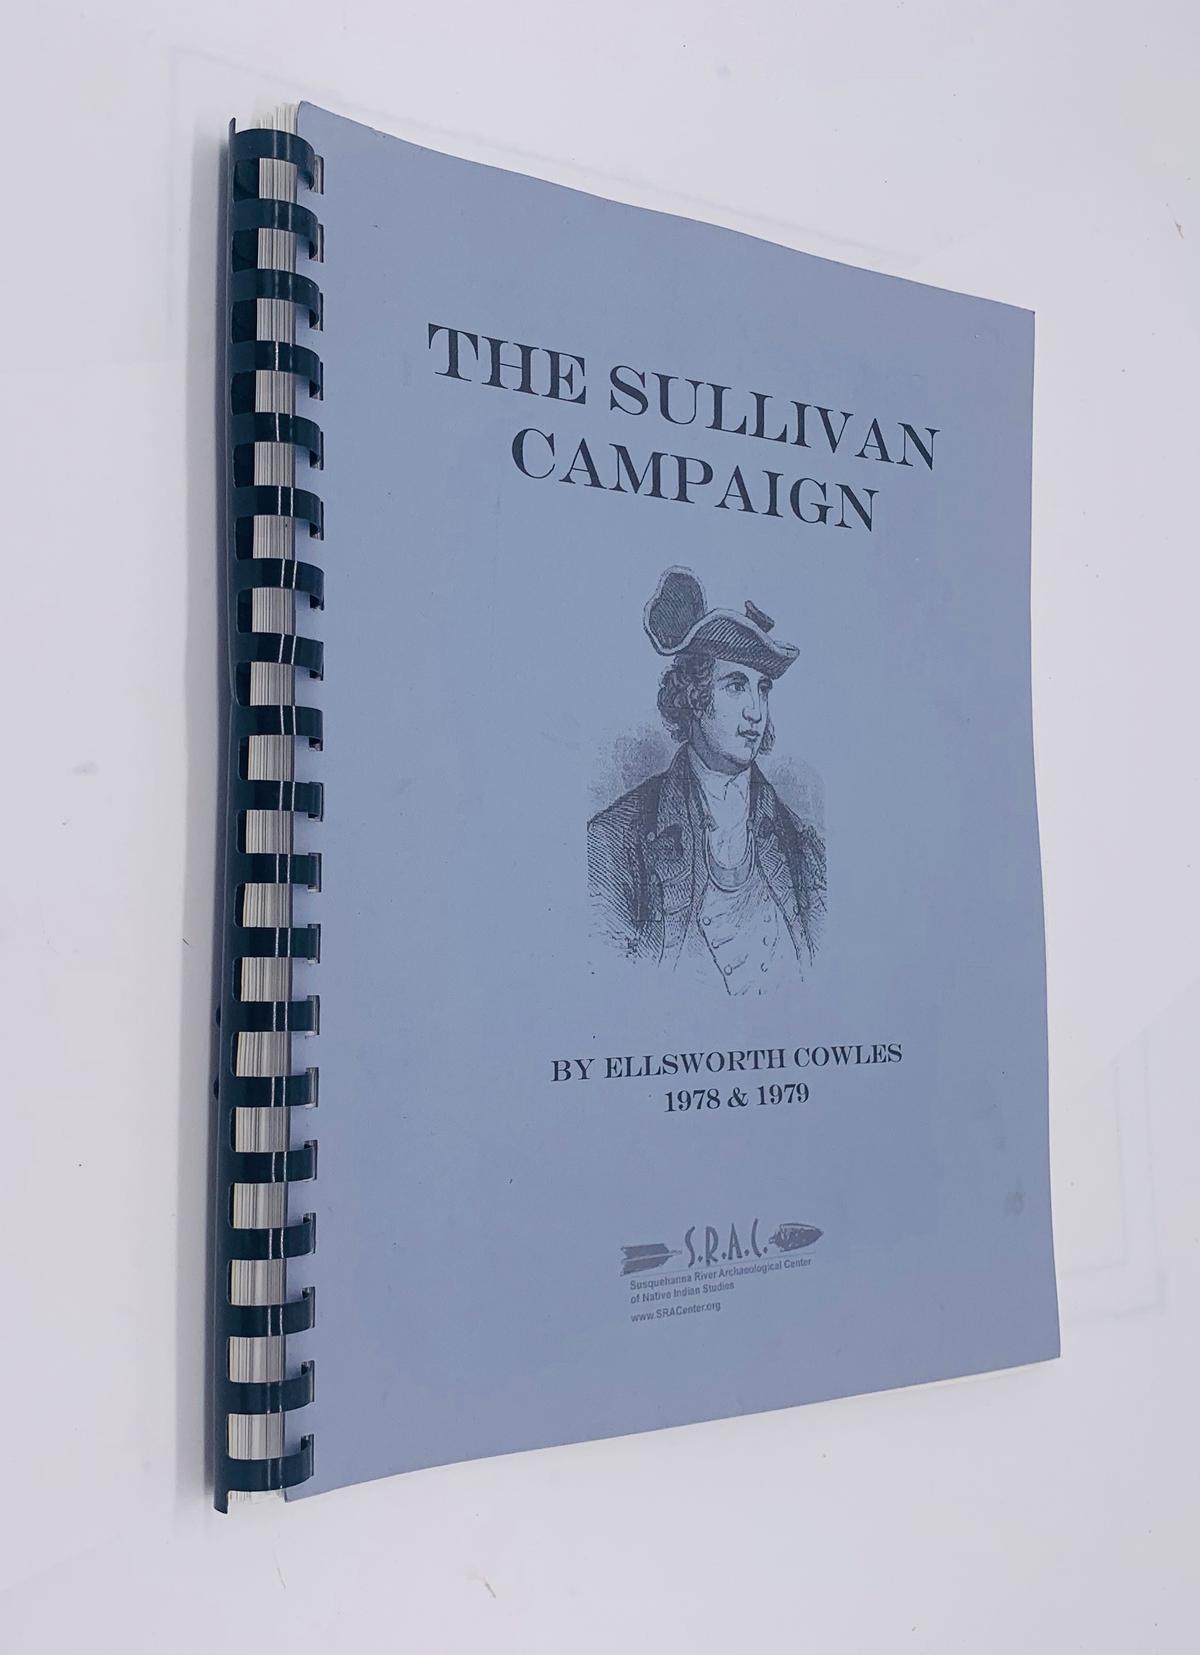 THE SULLIVAN CAMPAIGN by Ellsworth Cowles - American Revolution - Native American Studies